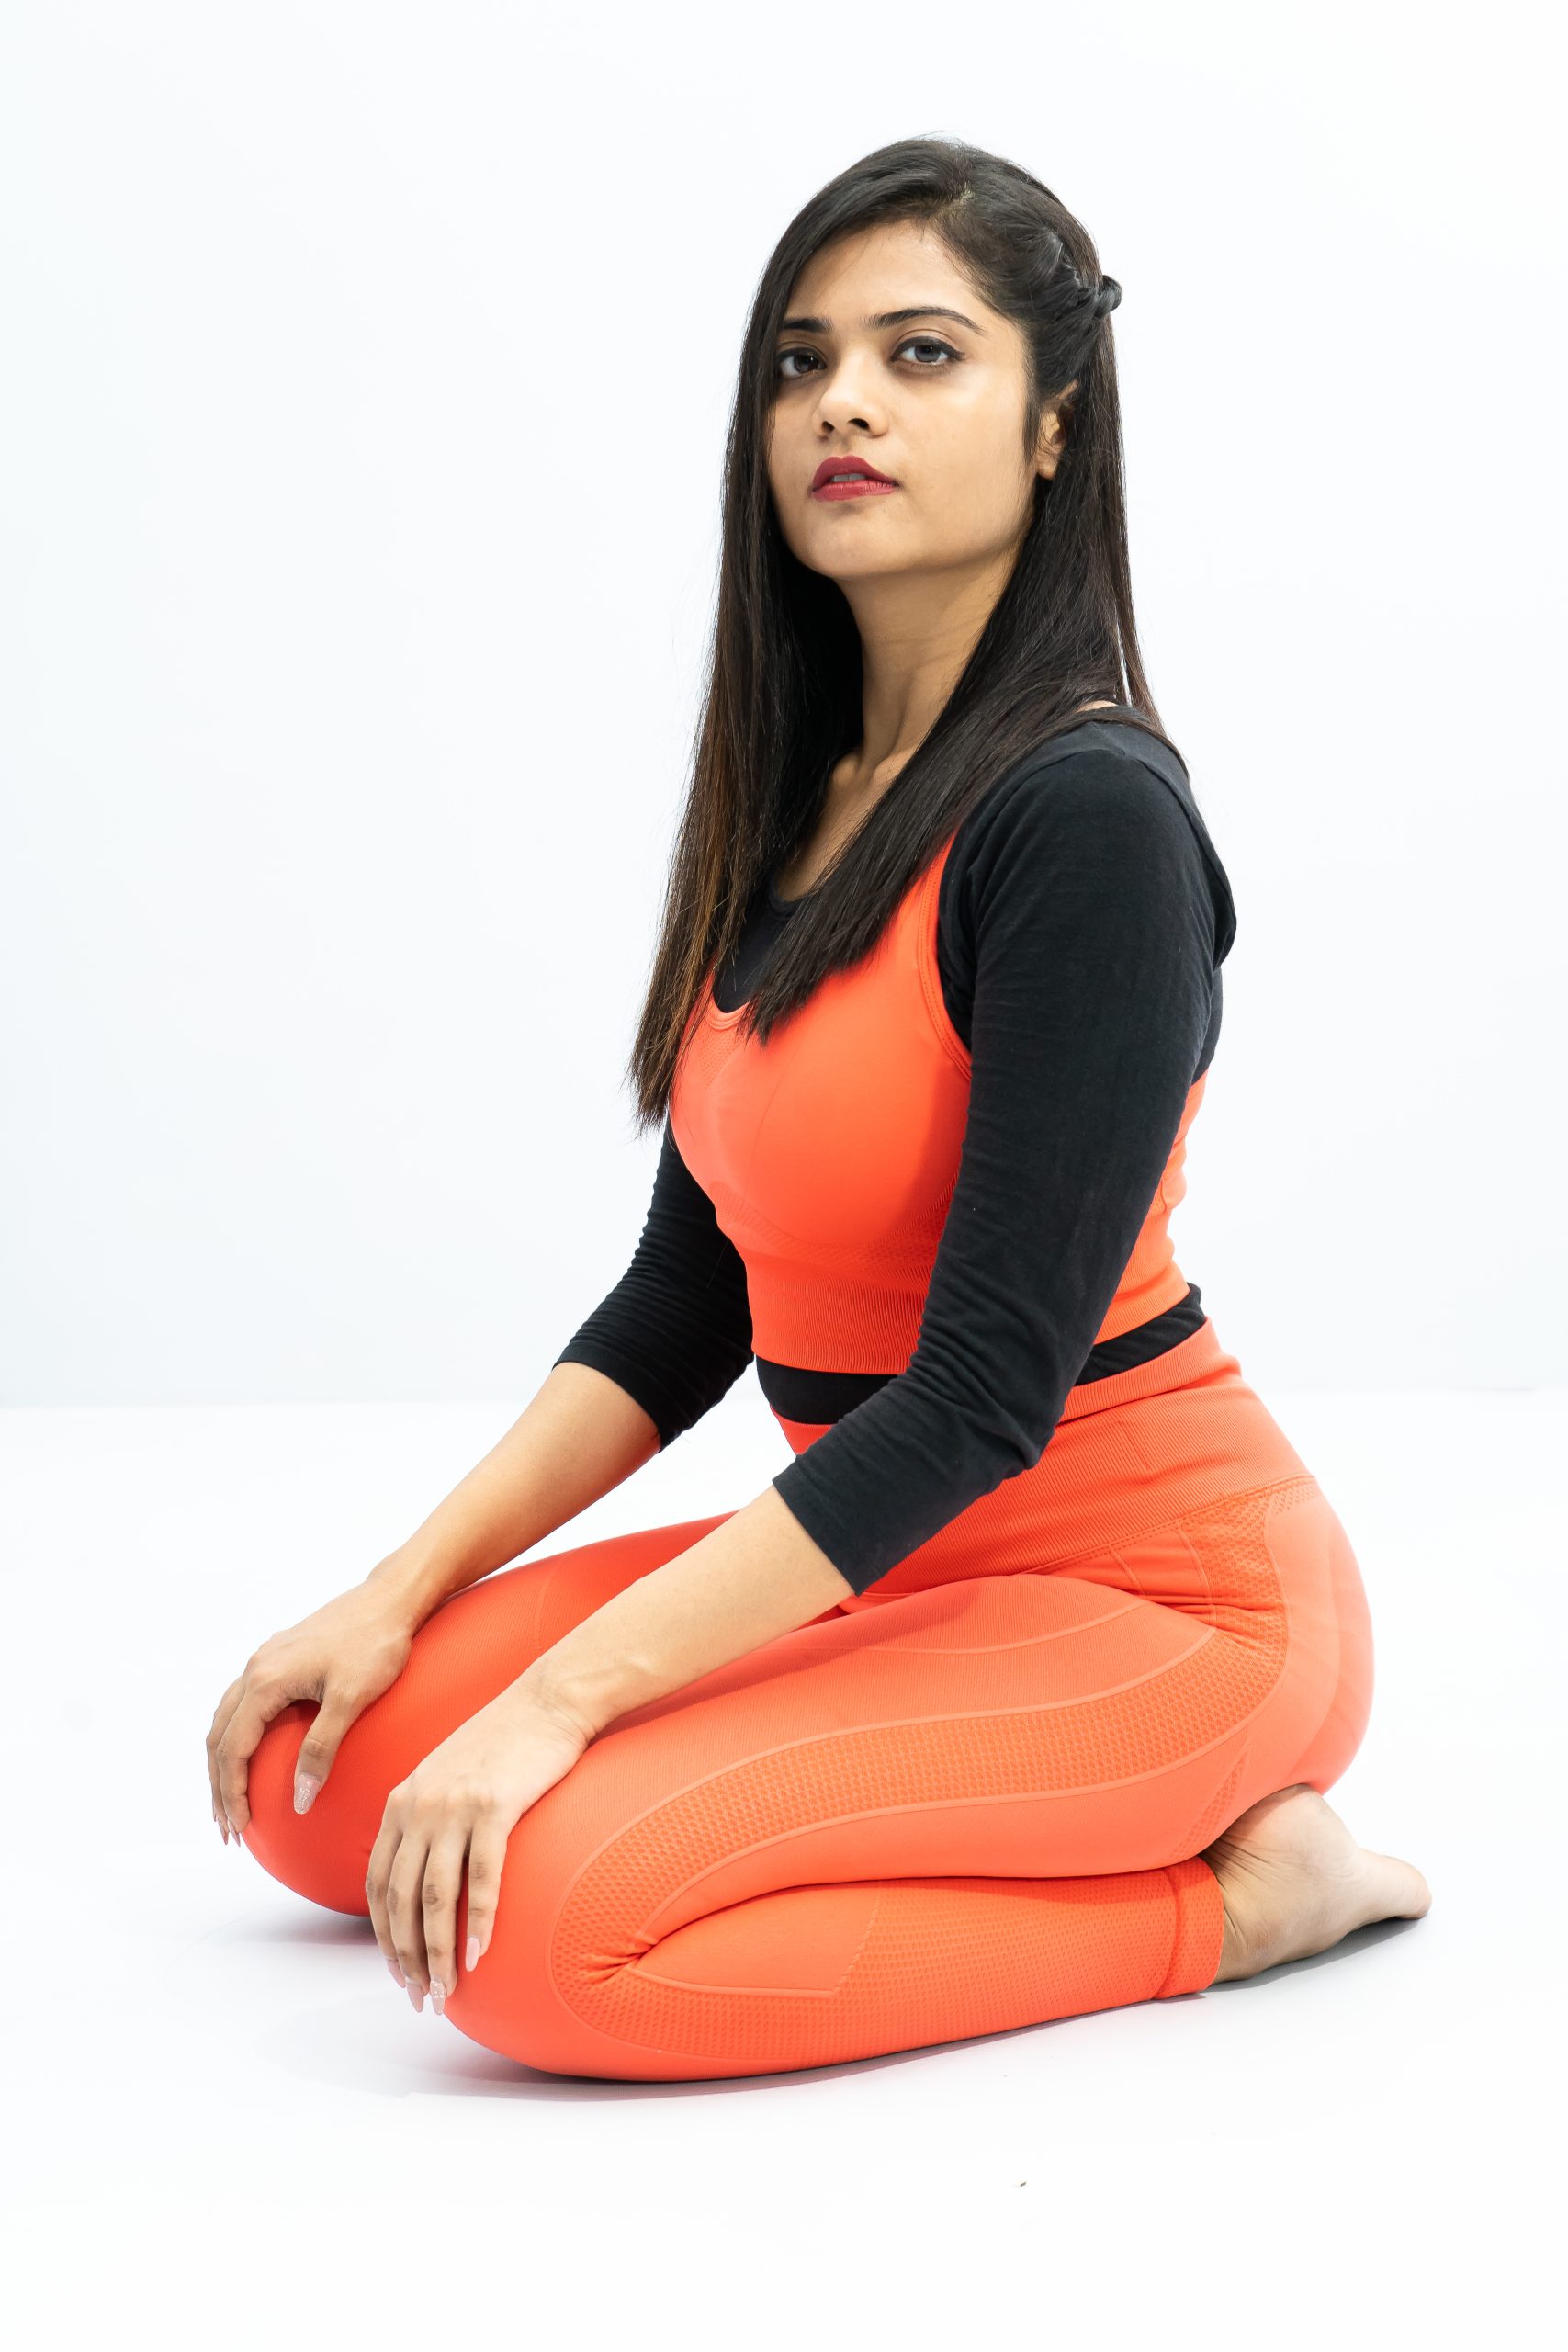 Fitness Influencer Of The Week : Somya Luhadia